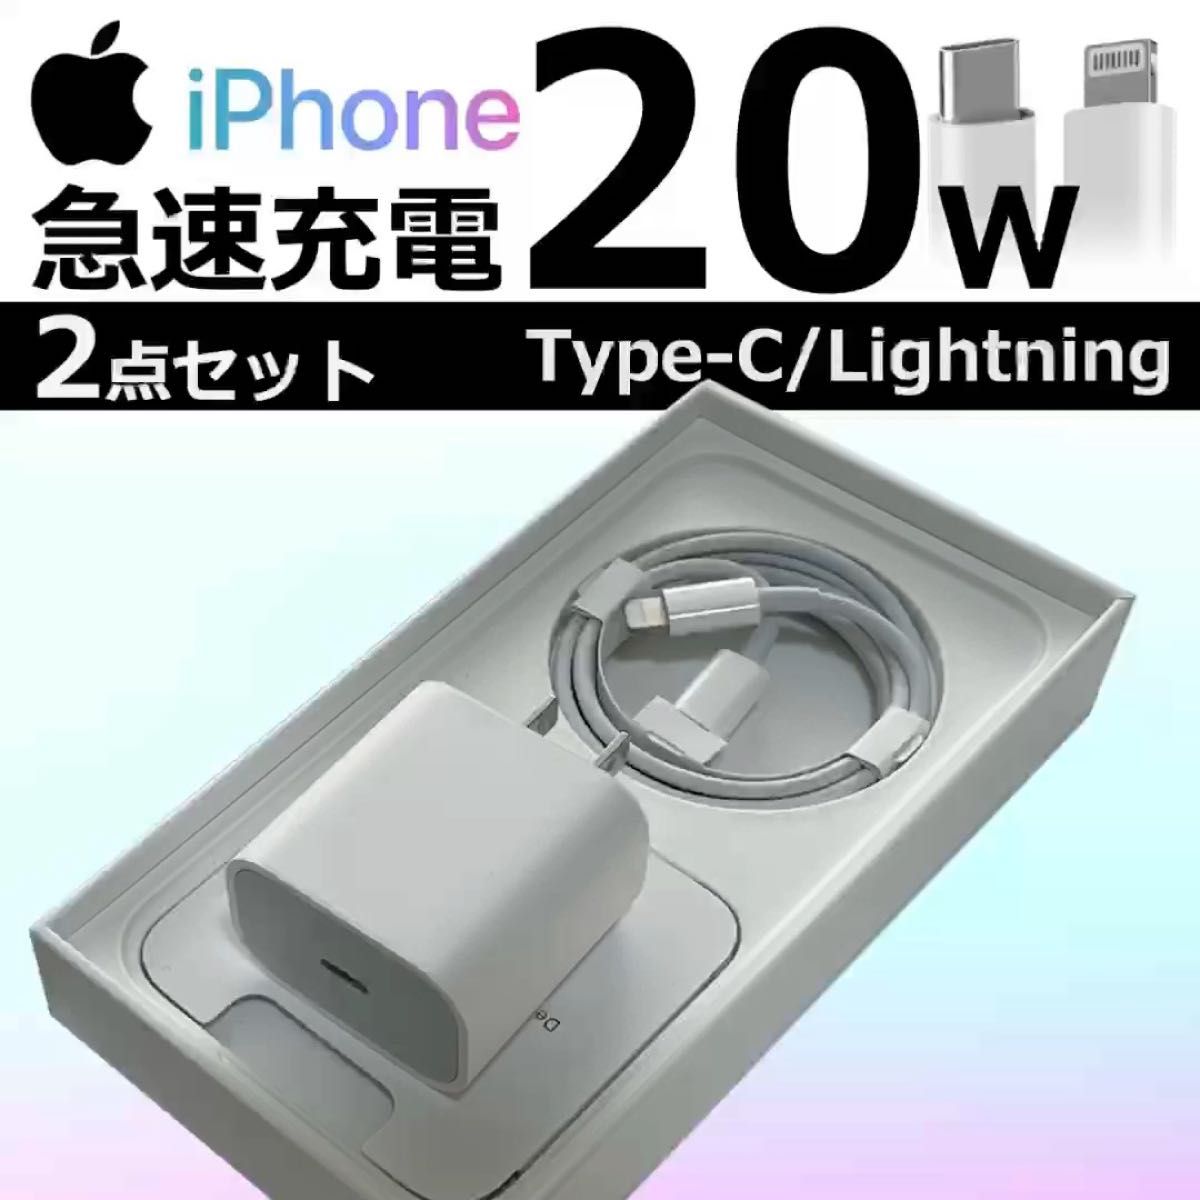 iPhone 充電器 Type-C 20W lightning cable ライトニングケーブル 急速充電 高速充電 データ転送